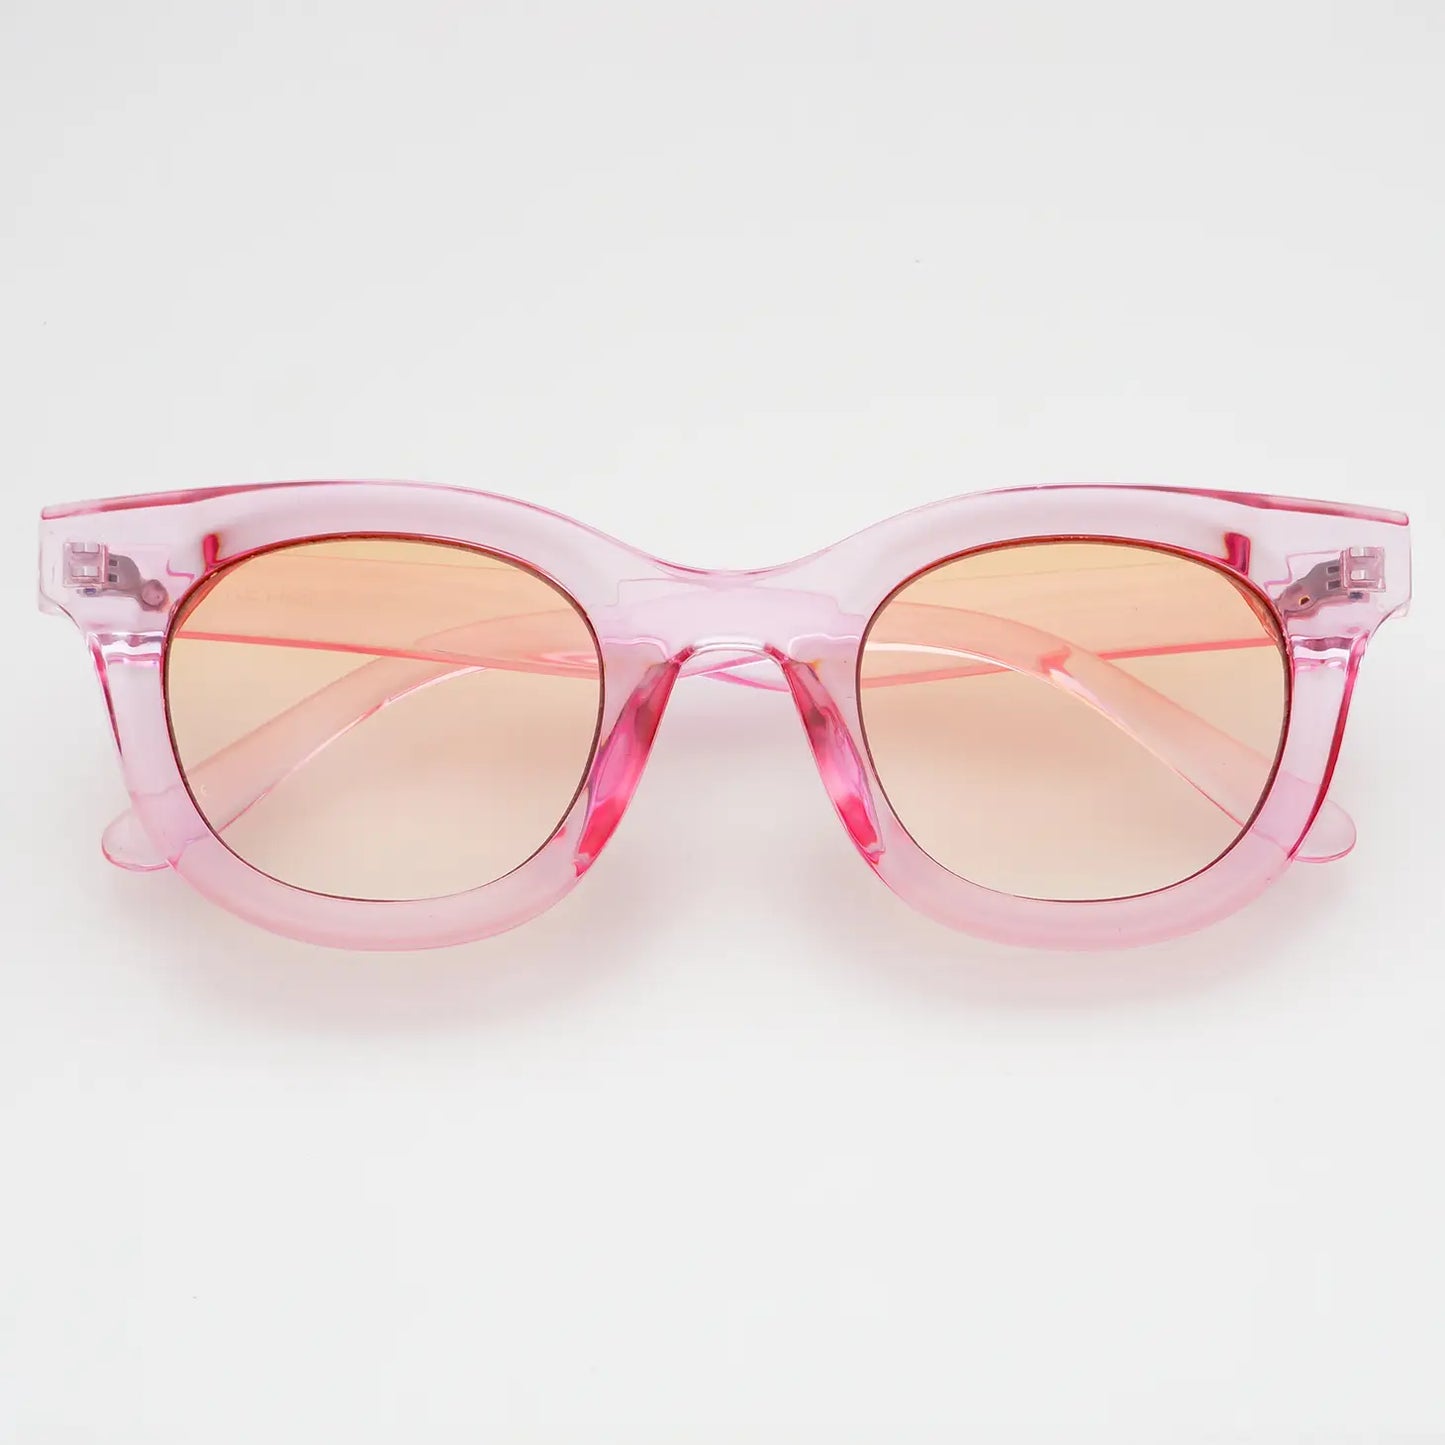 Demi Sunglasses - Blush Pink